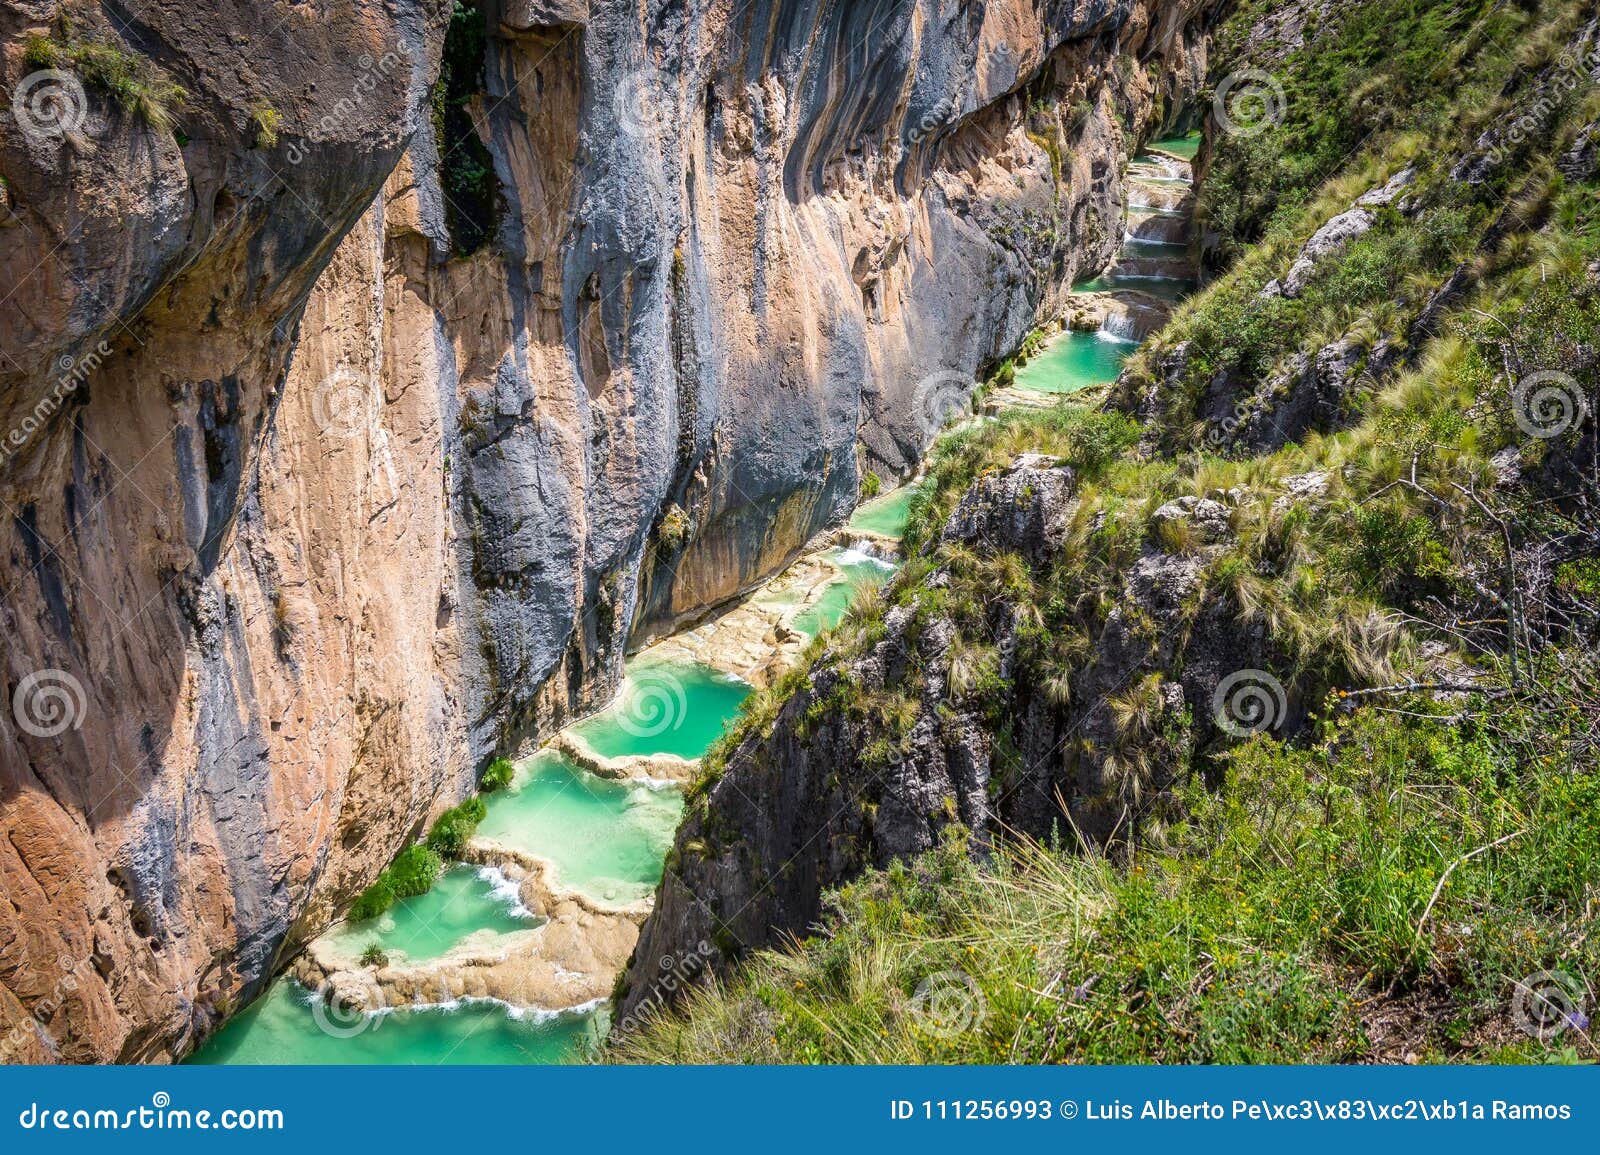 natural turquoise pools of millpu in ayacucho, peru.